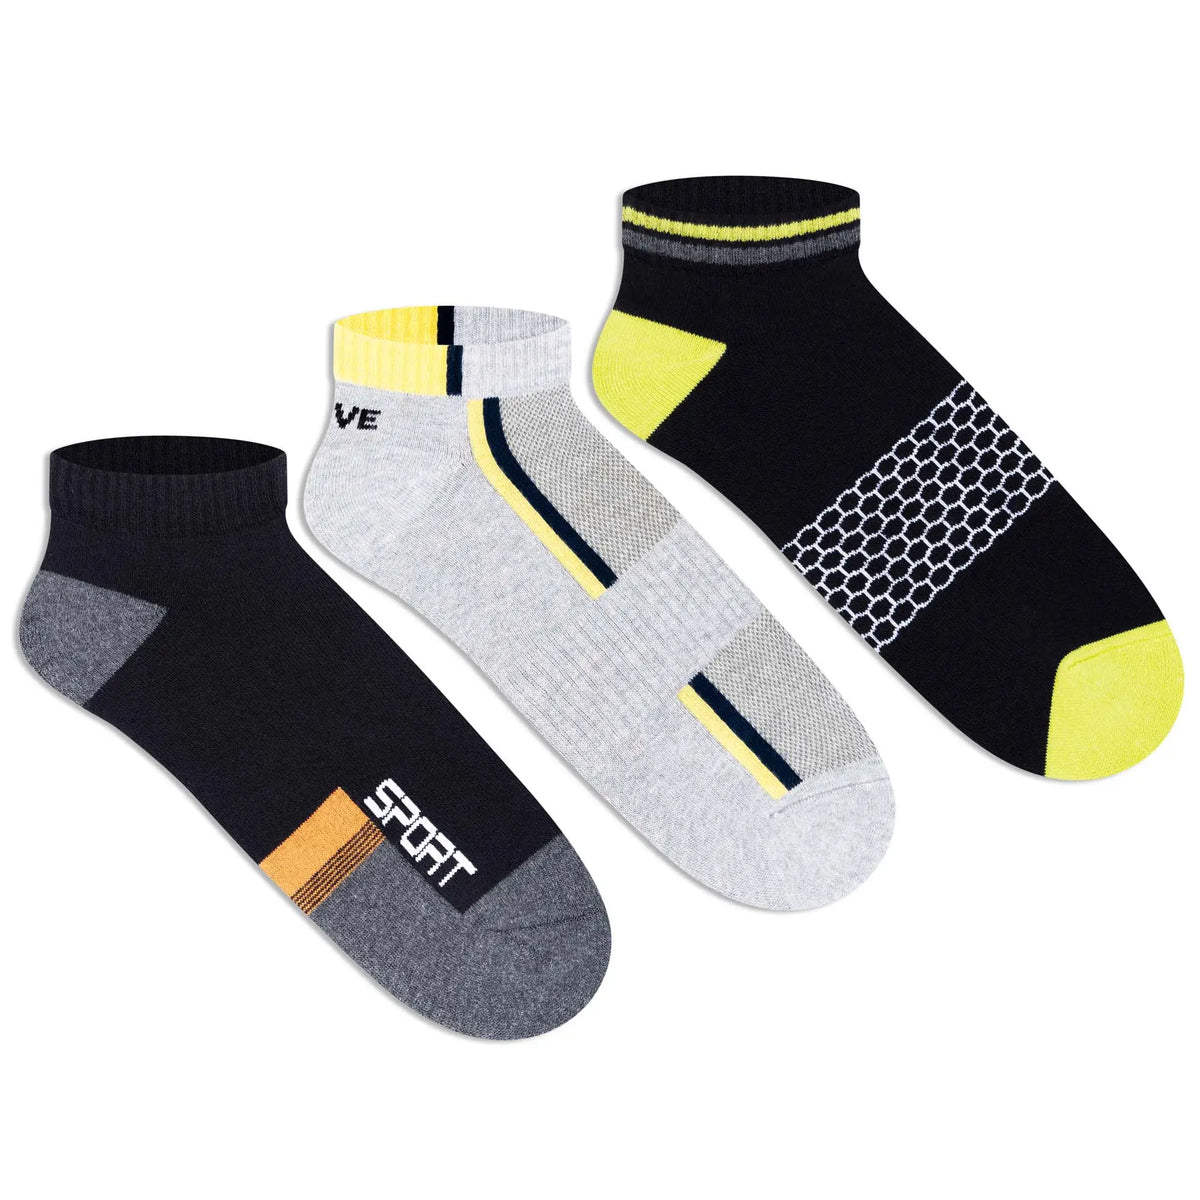 Sports Low-Cut Socks for Men (Pack of 3)